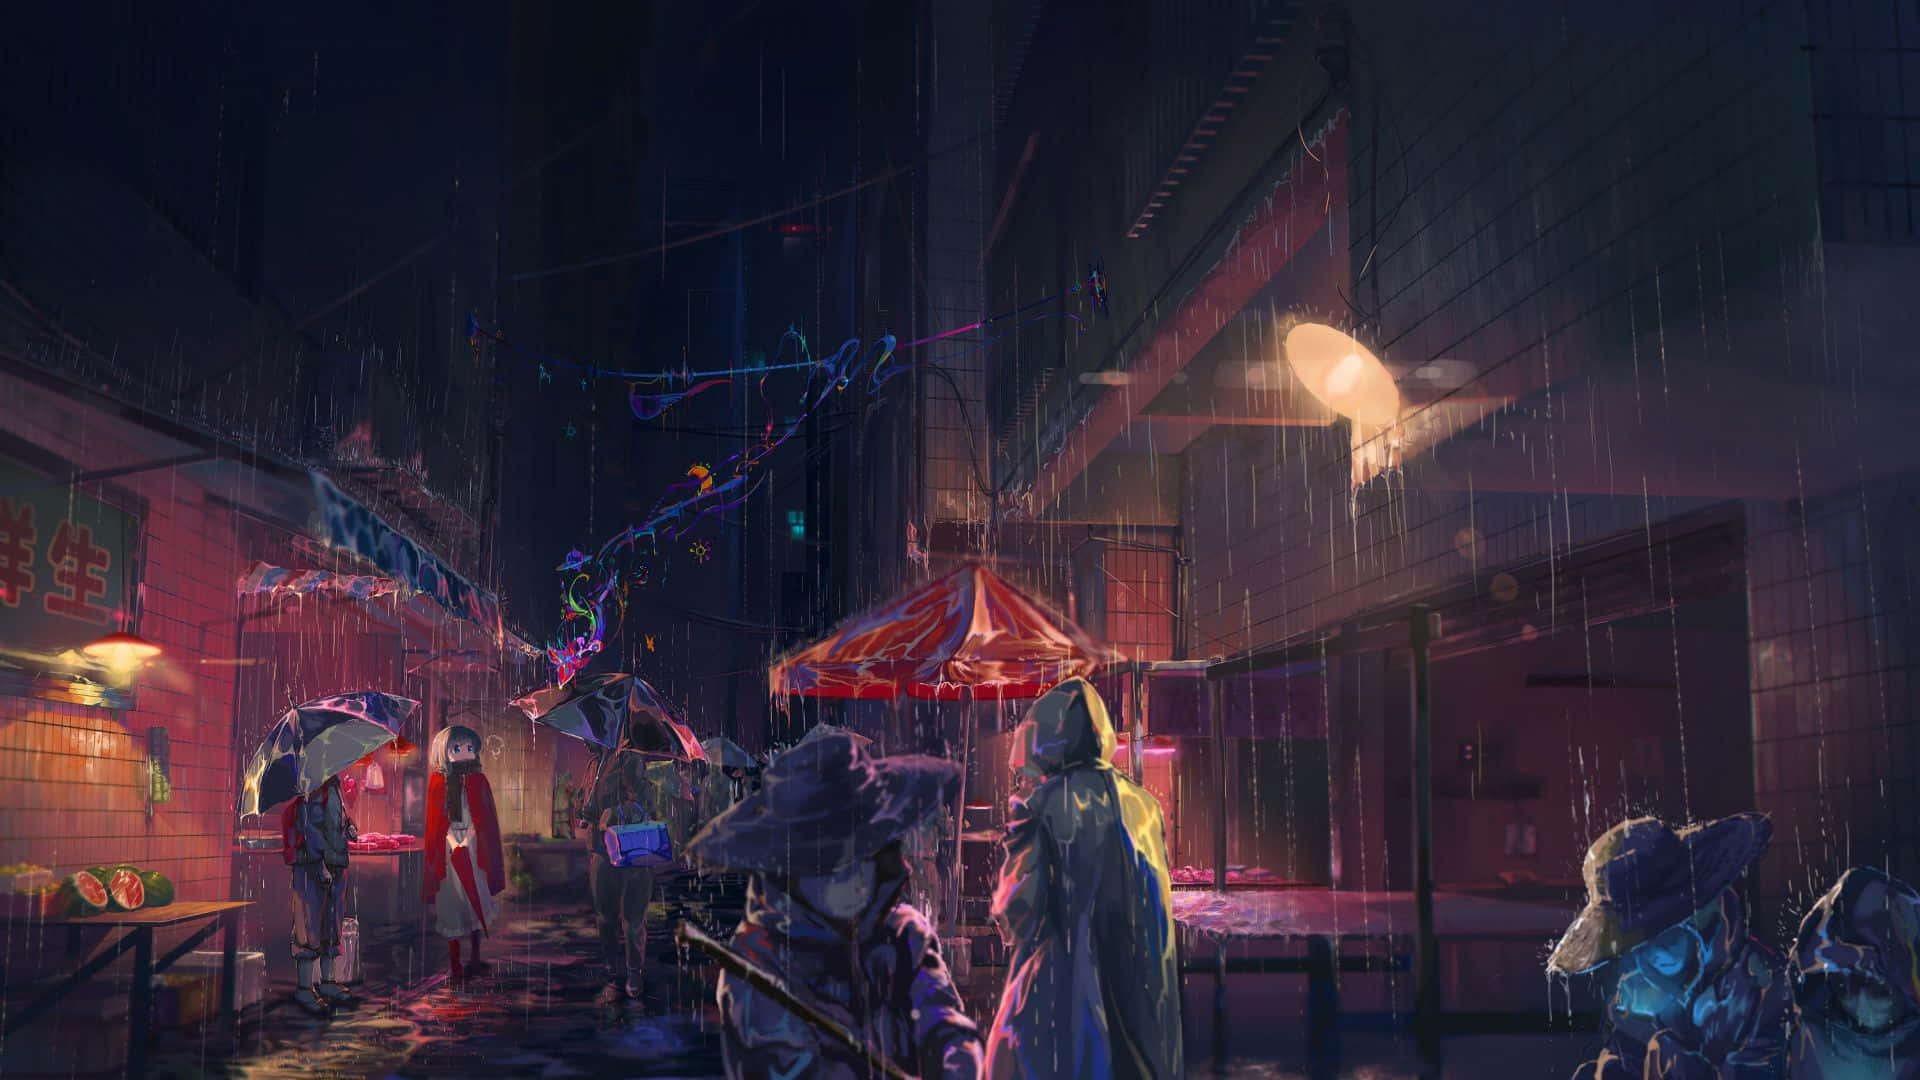 A Dark Street Scene With People Walking In The Rain Background